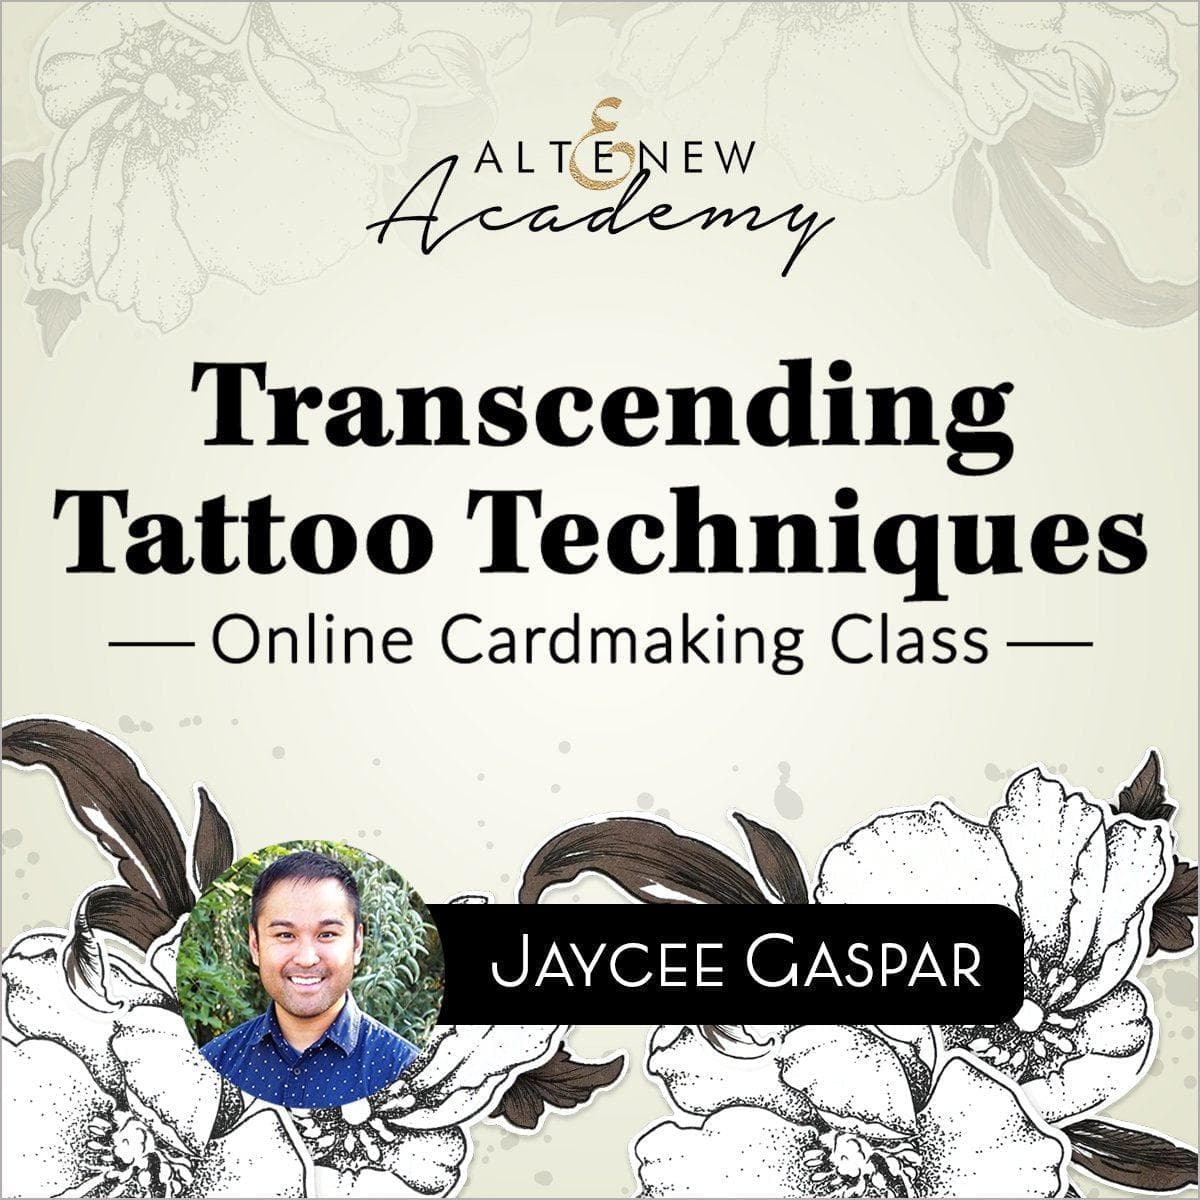 Altenew Class Transcending Tattoo Techniques Online Cardmaking Class